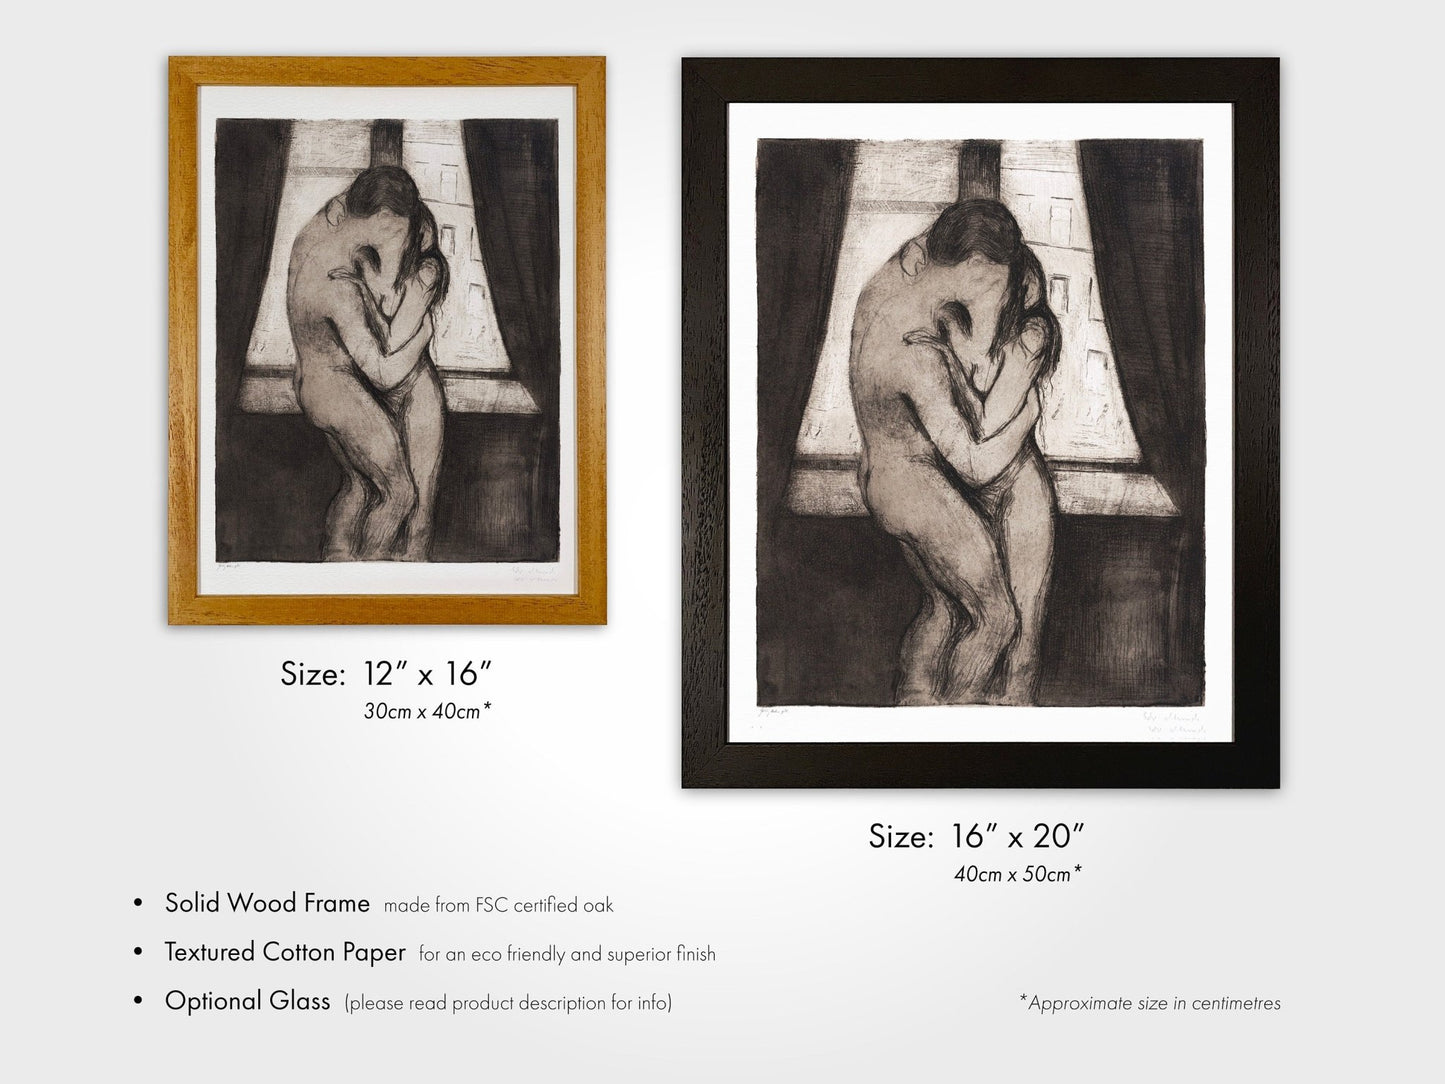 EDVARD MUNCH - The Kiss (Hi-Res Expressionist Giclée Modern Sketch Art Print) also available Framed - Pathos Studio - Art Prints